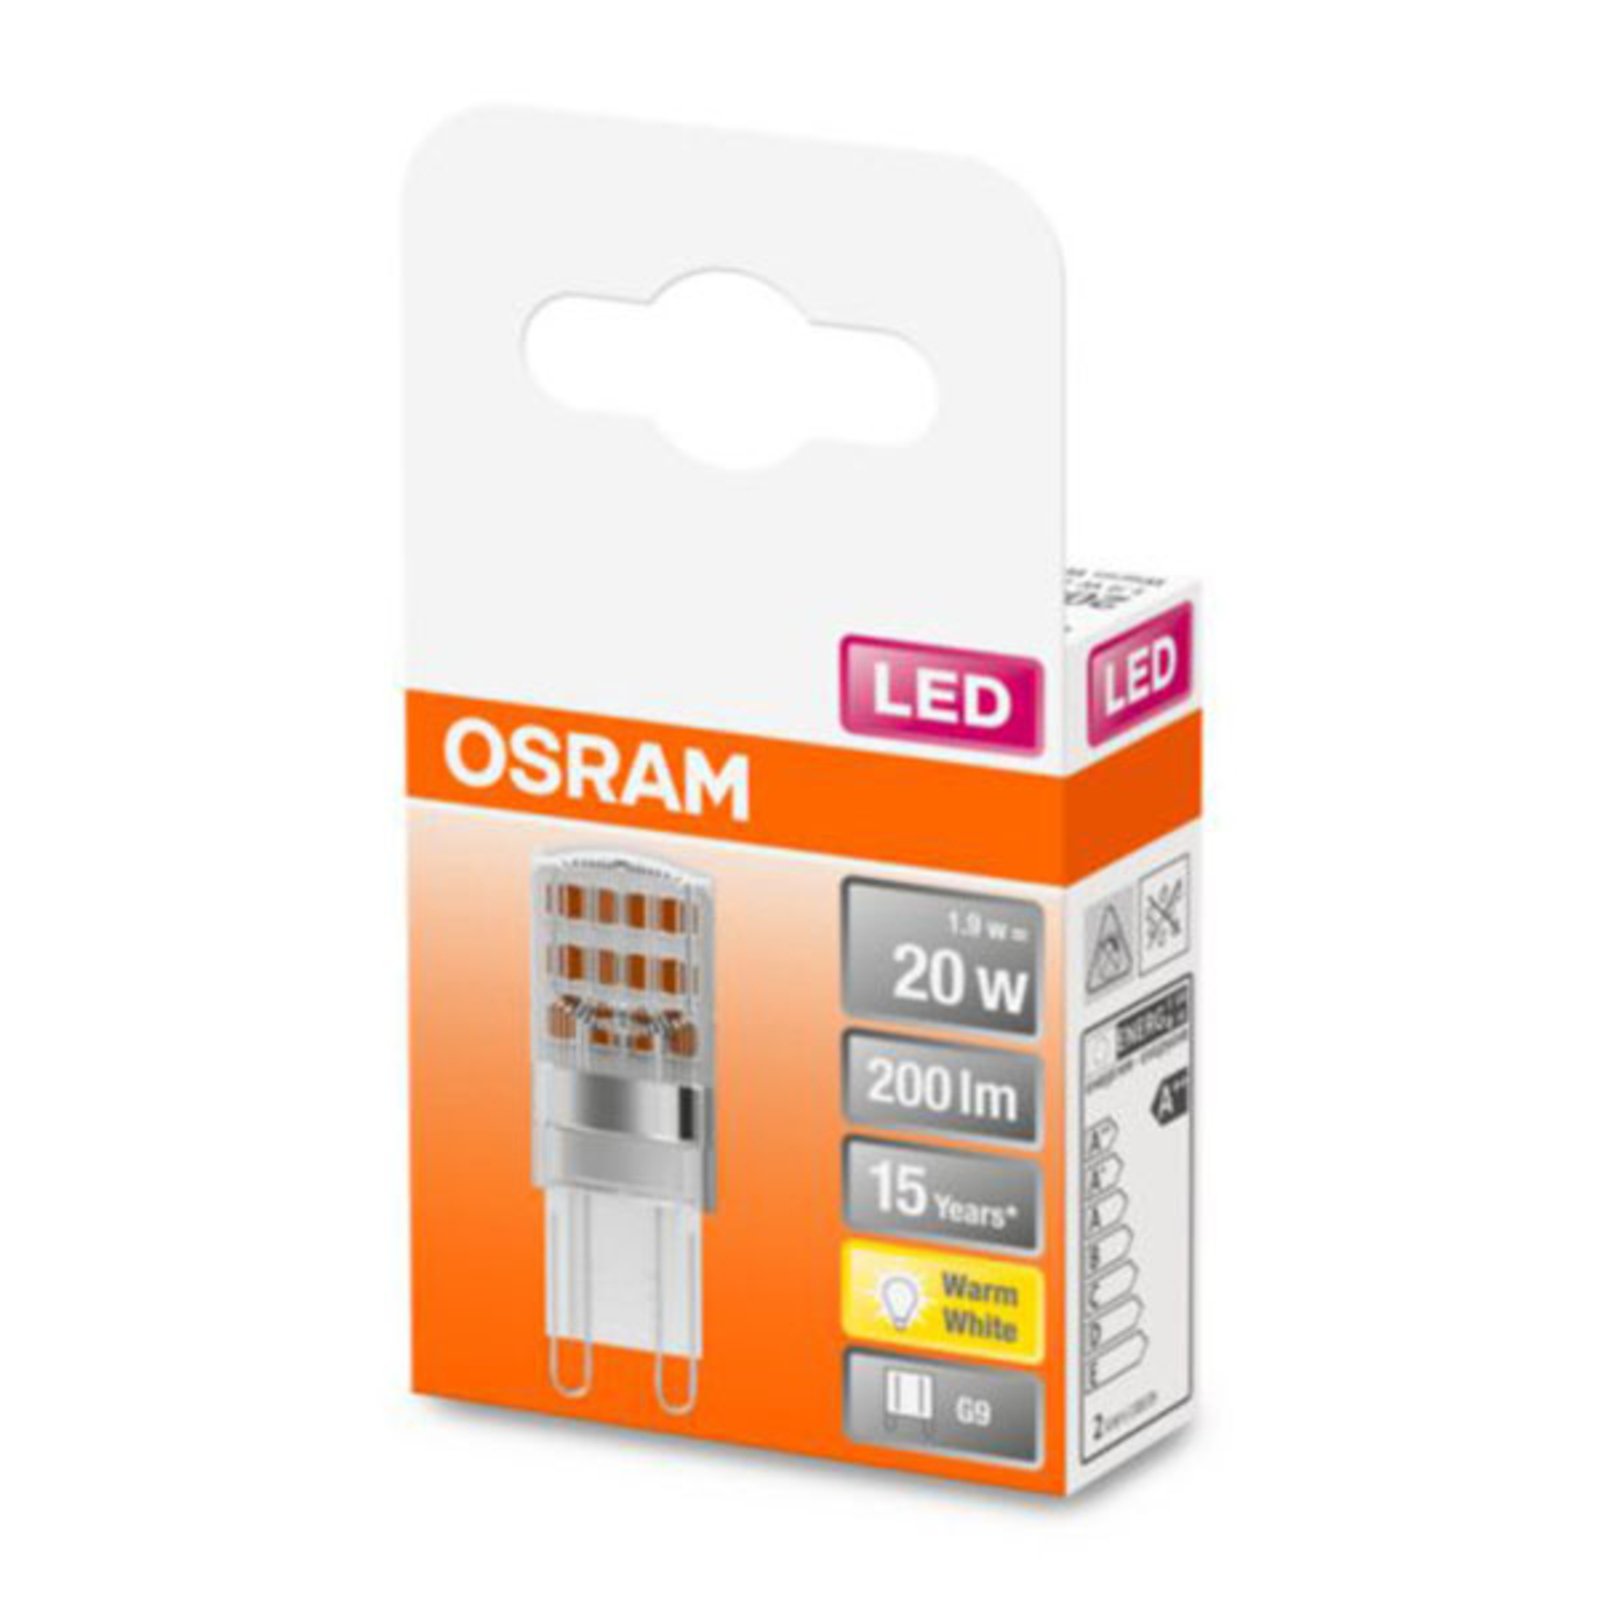 OSRAM bi-pin LED bulb G9 1.9W 2700K clear